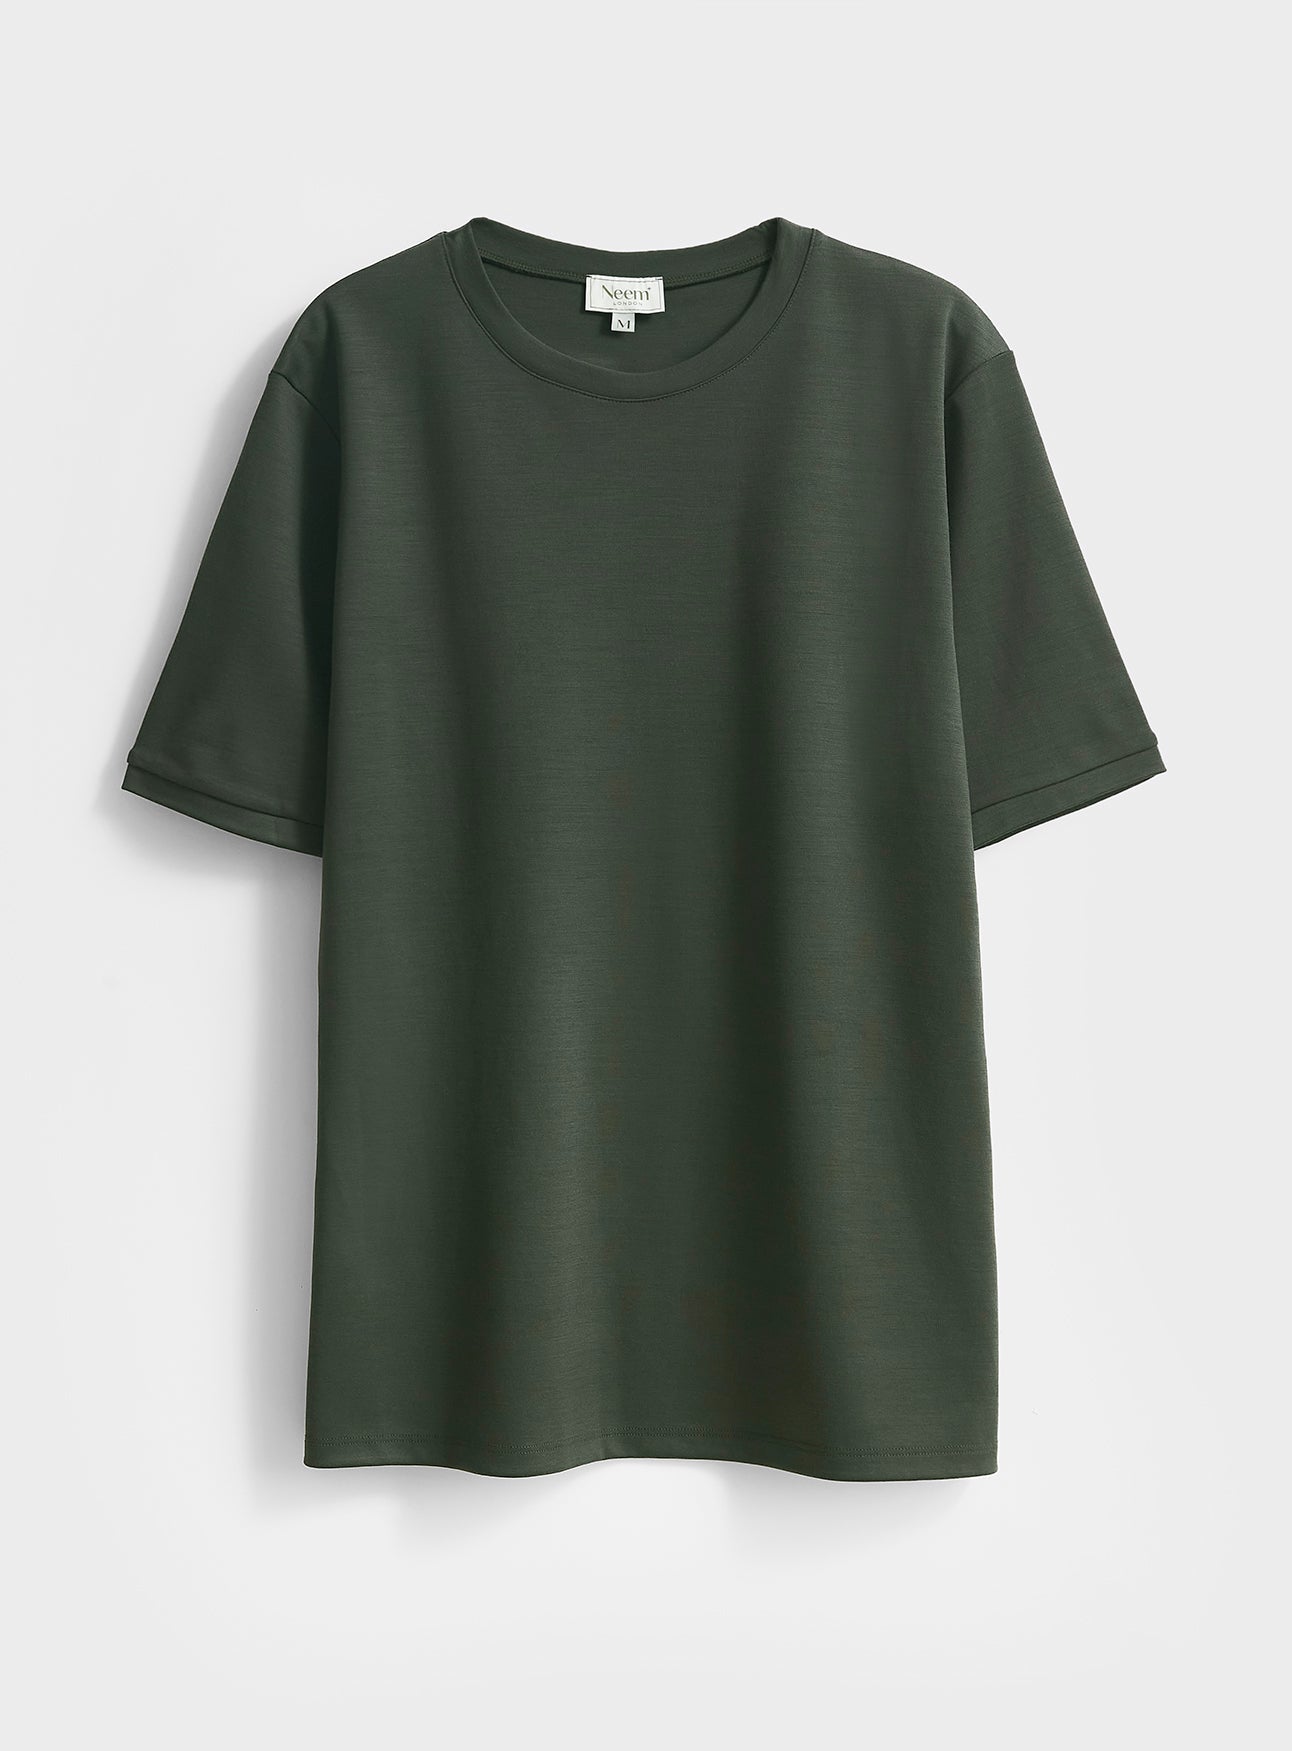 sustainable t shirts